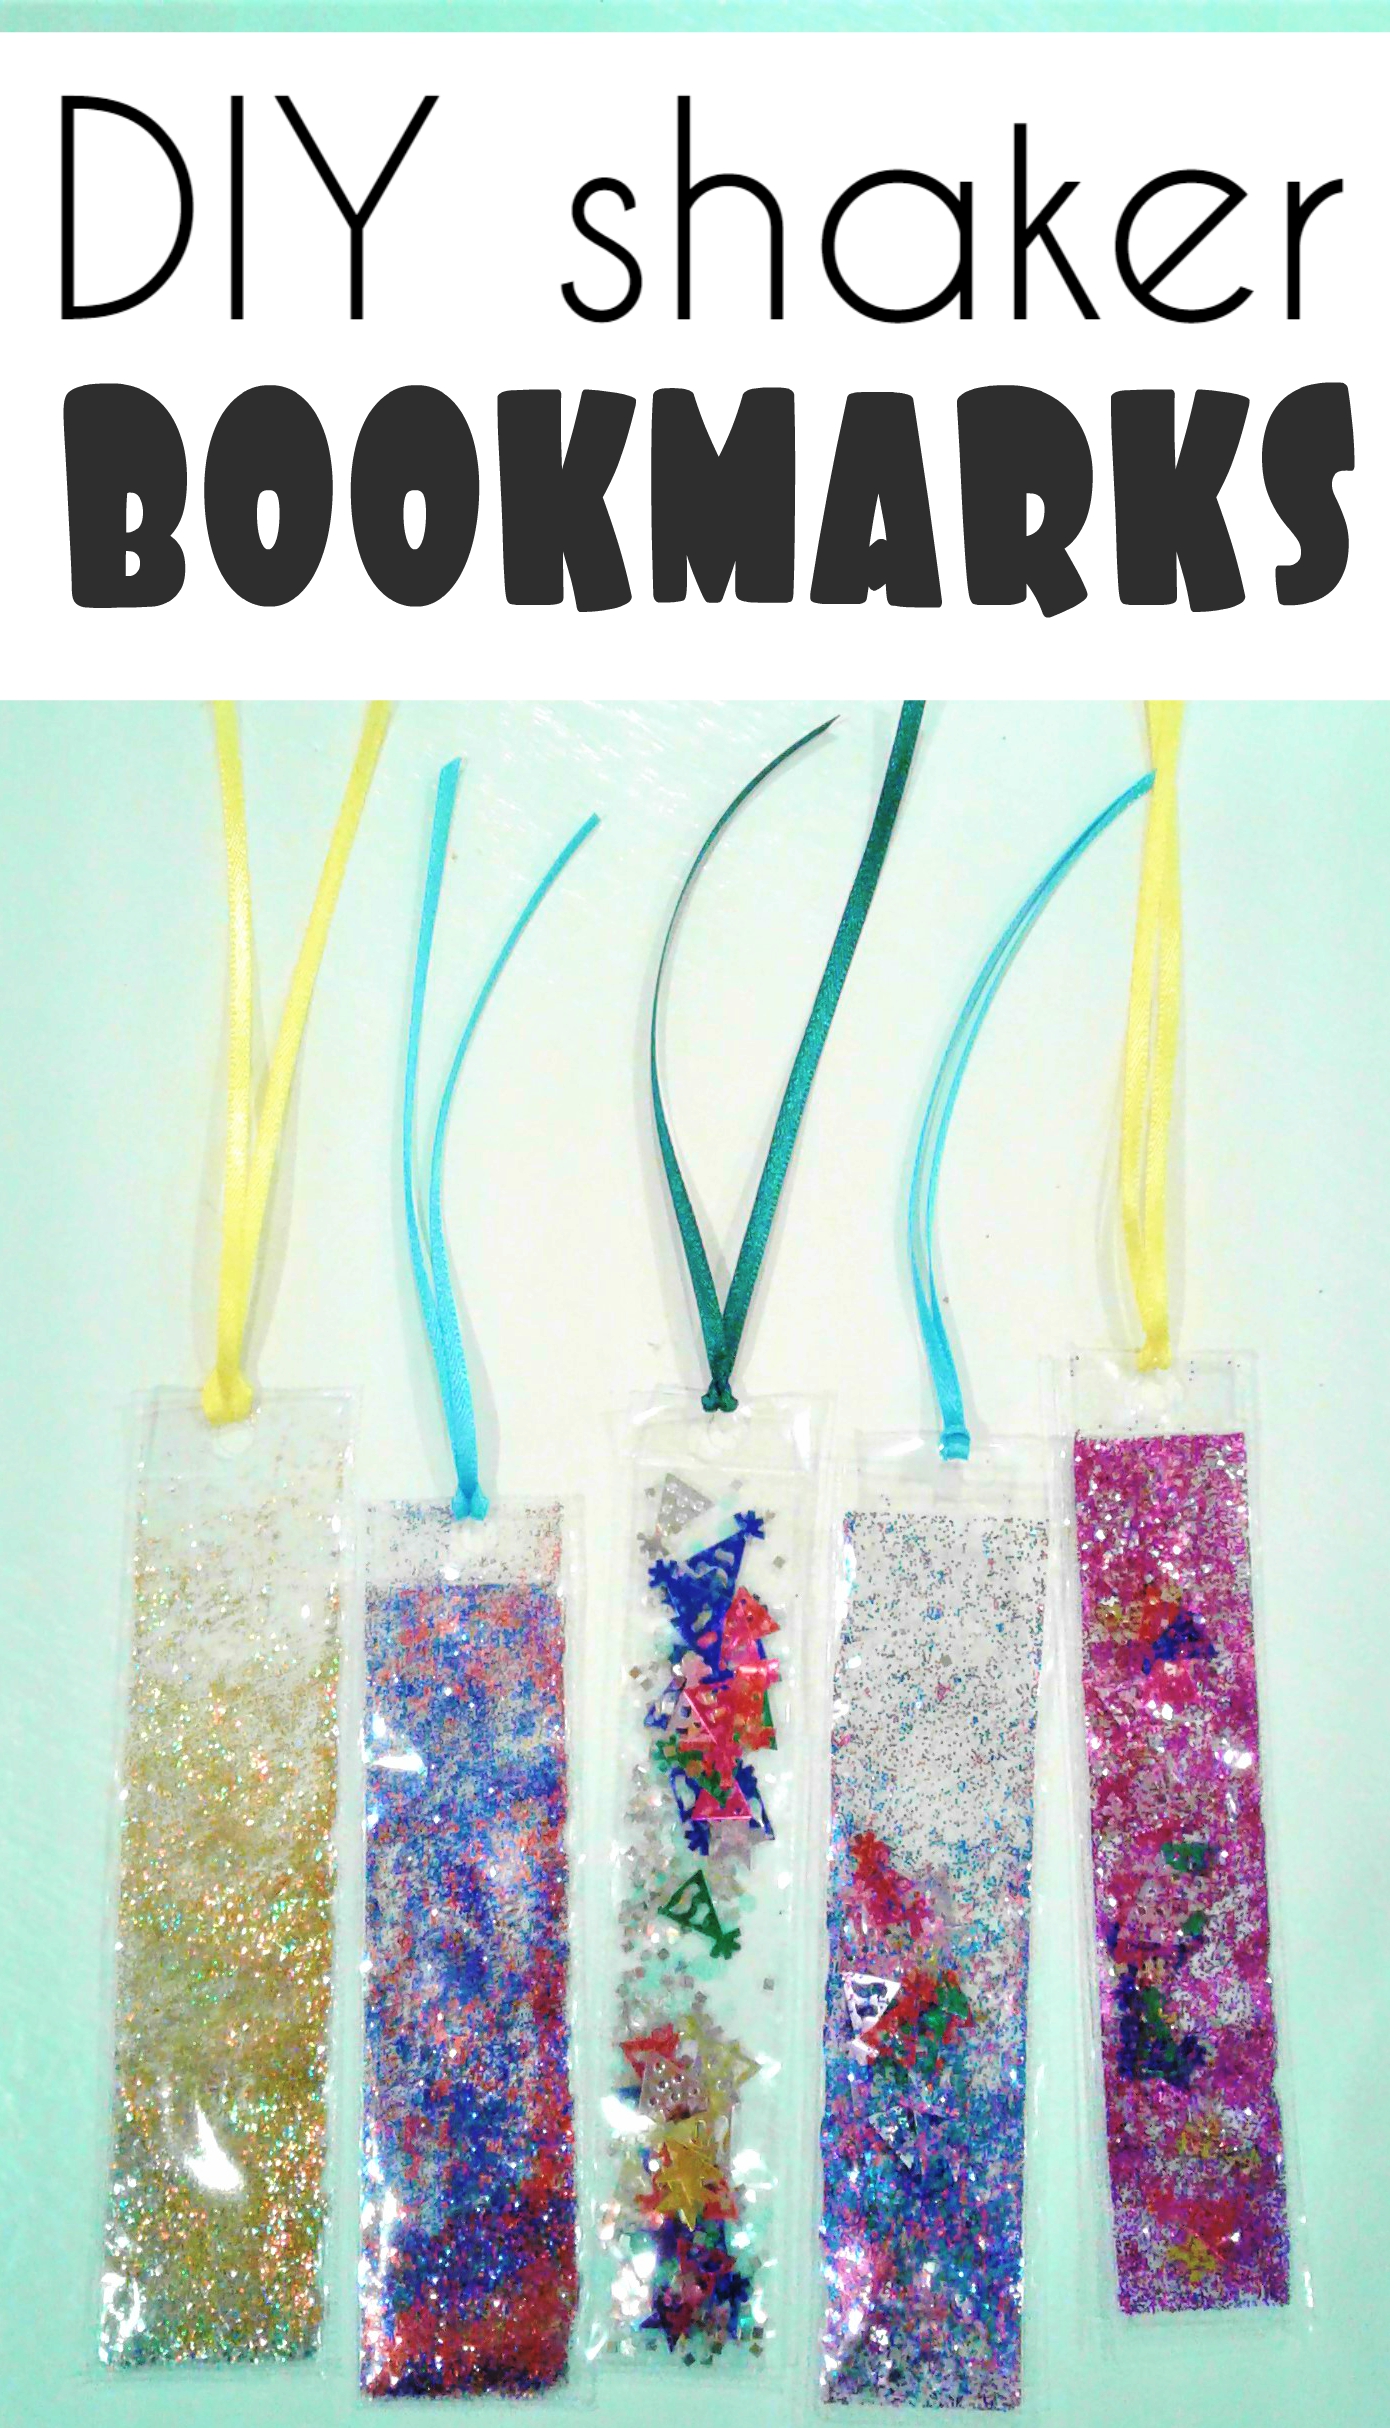 DIY confetti filled shaker bookmarks